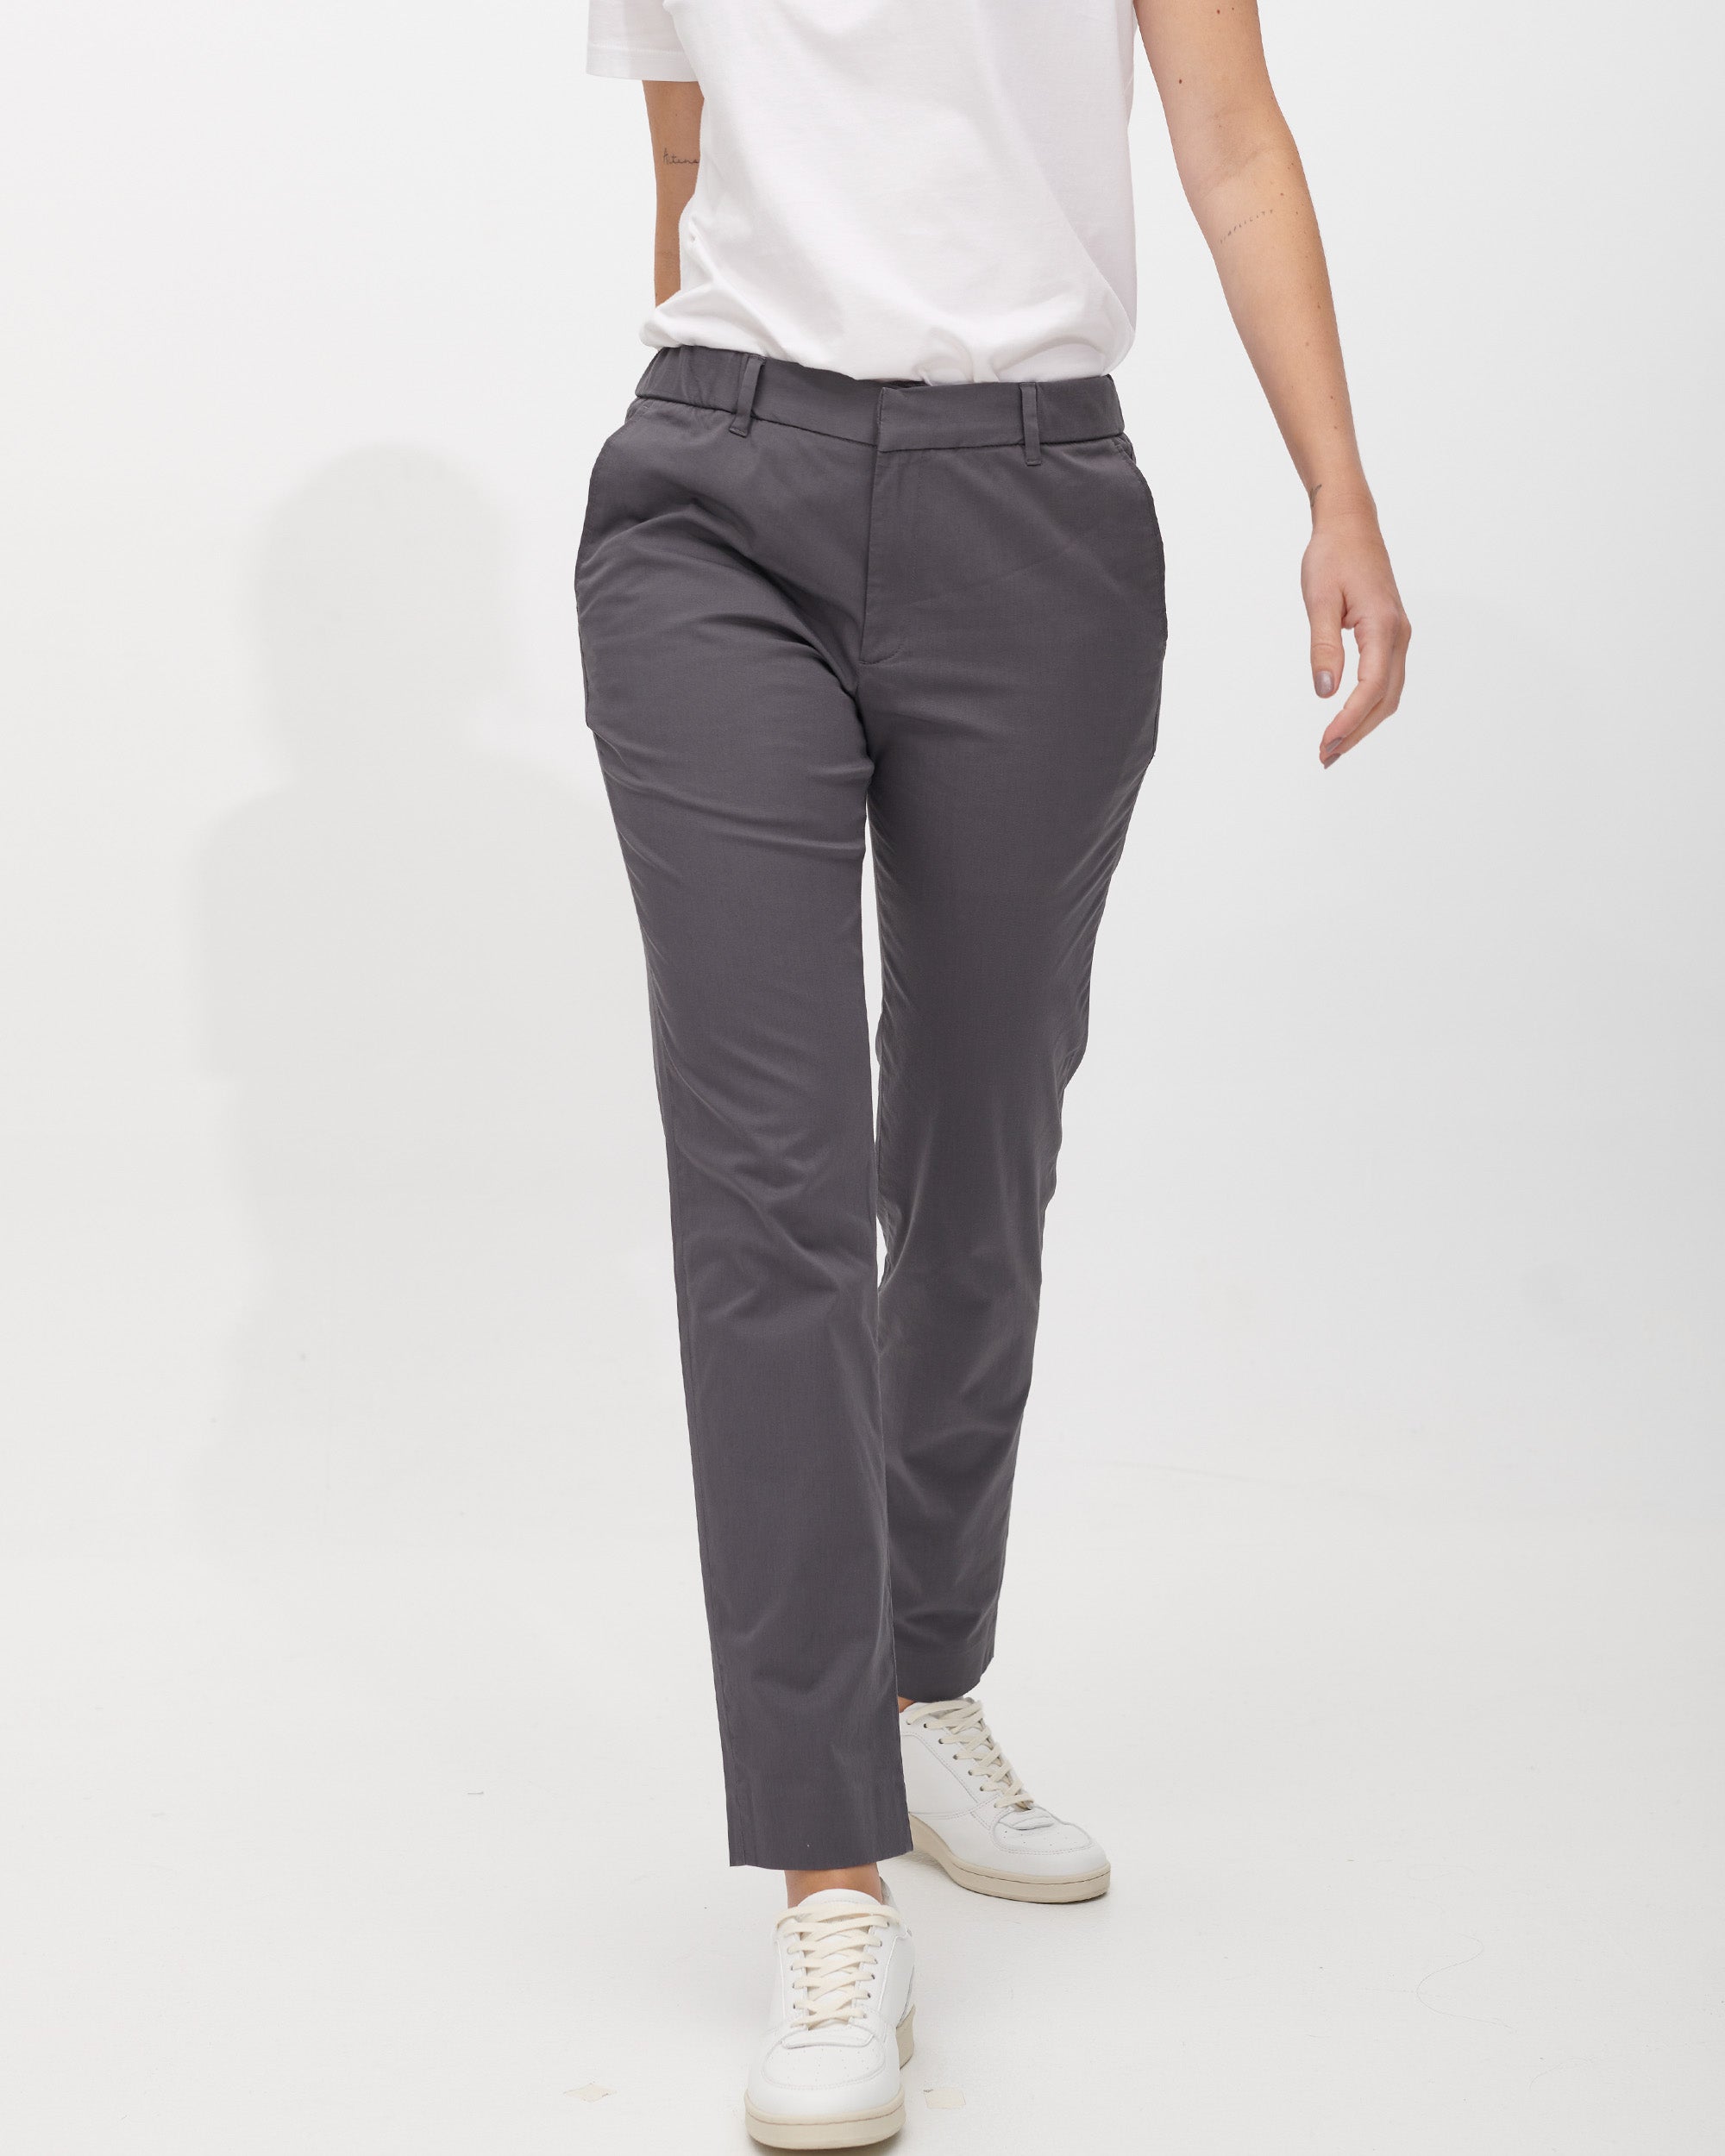 Cotton | Chino Stretch Trouser Grey in Chino Boyfriend The for Women